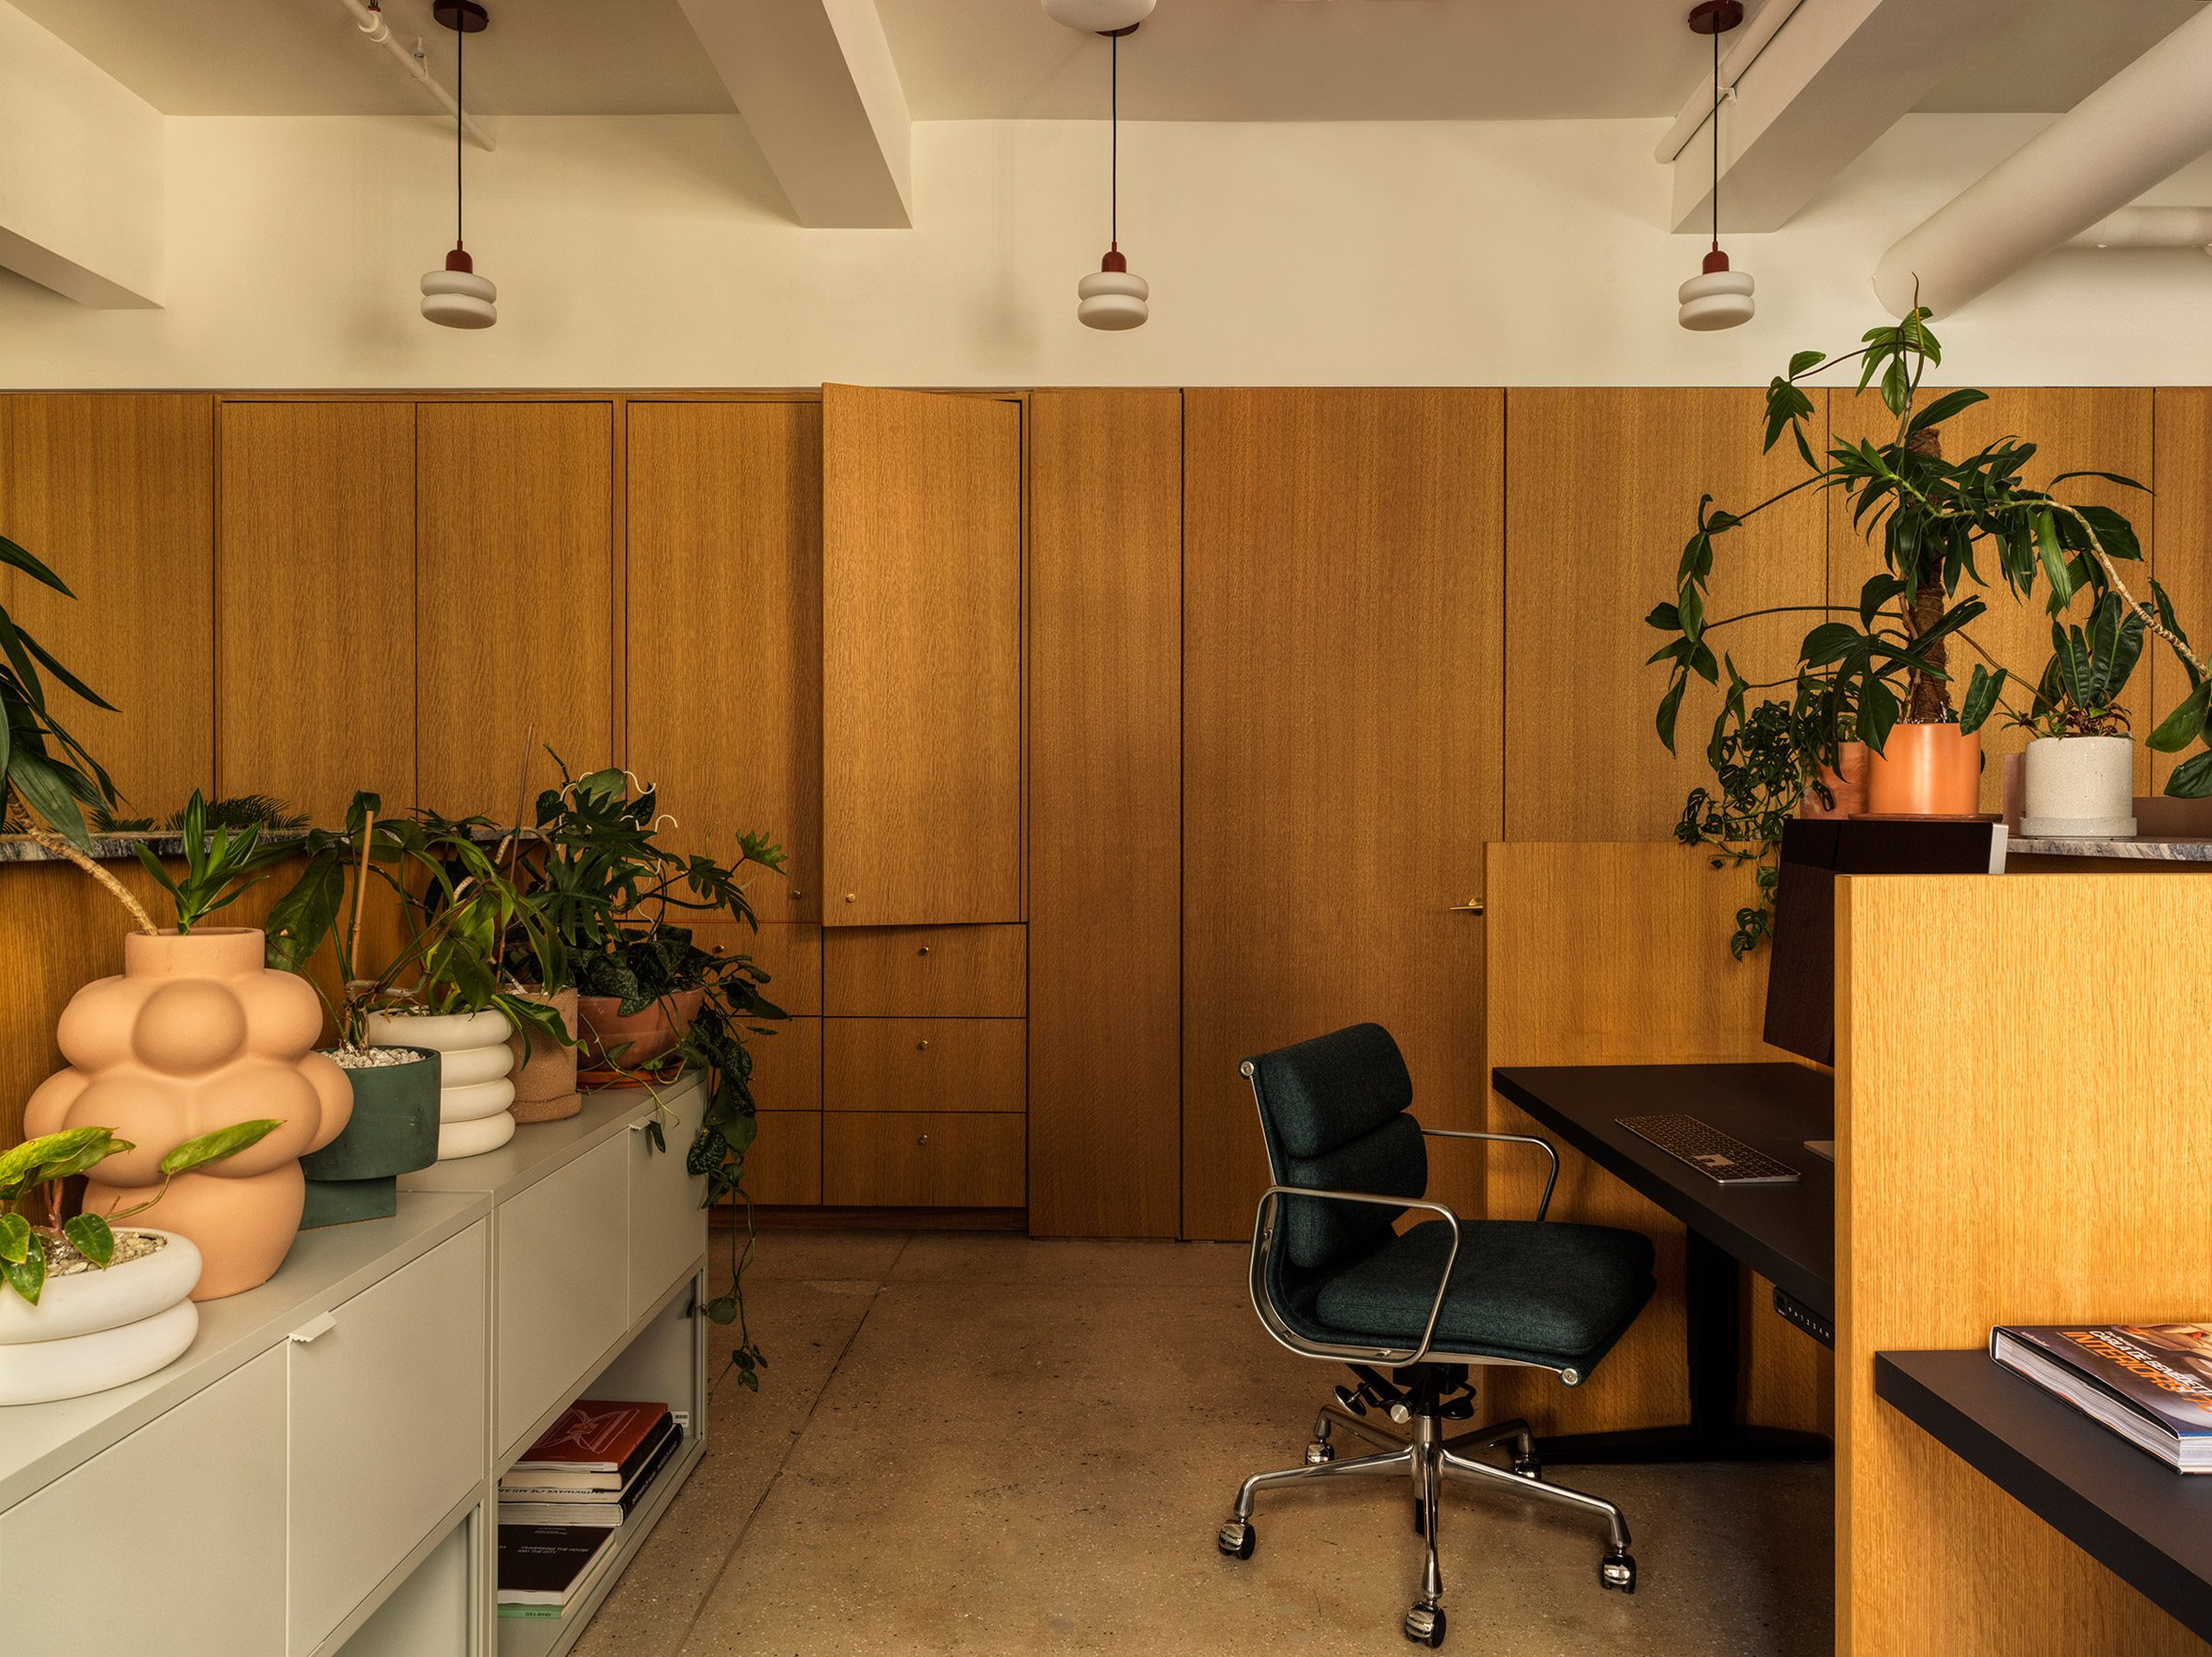 A communal workspace withsit-stand desks, oak dividers and plenty of ledges for plants